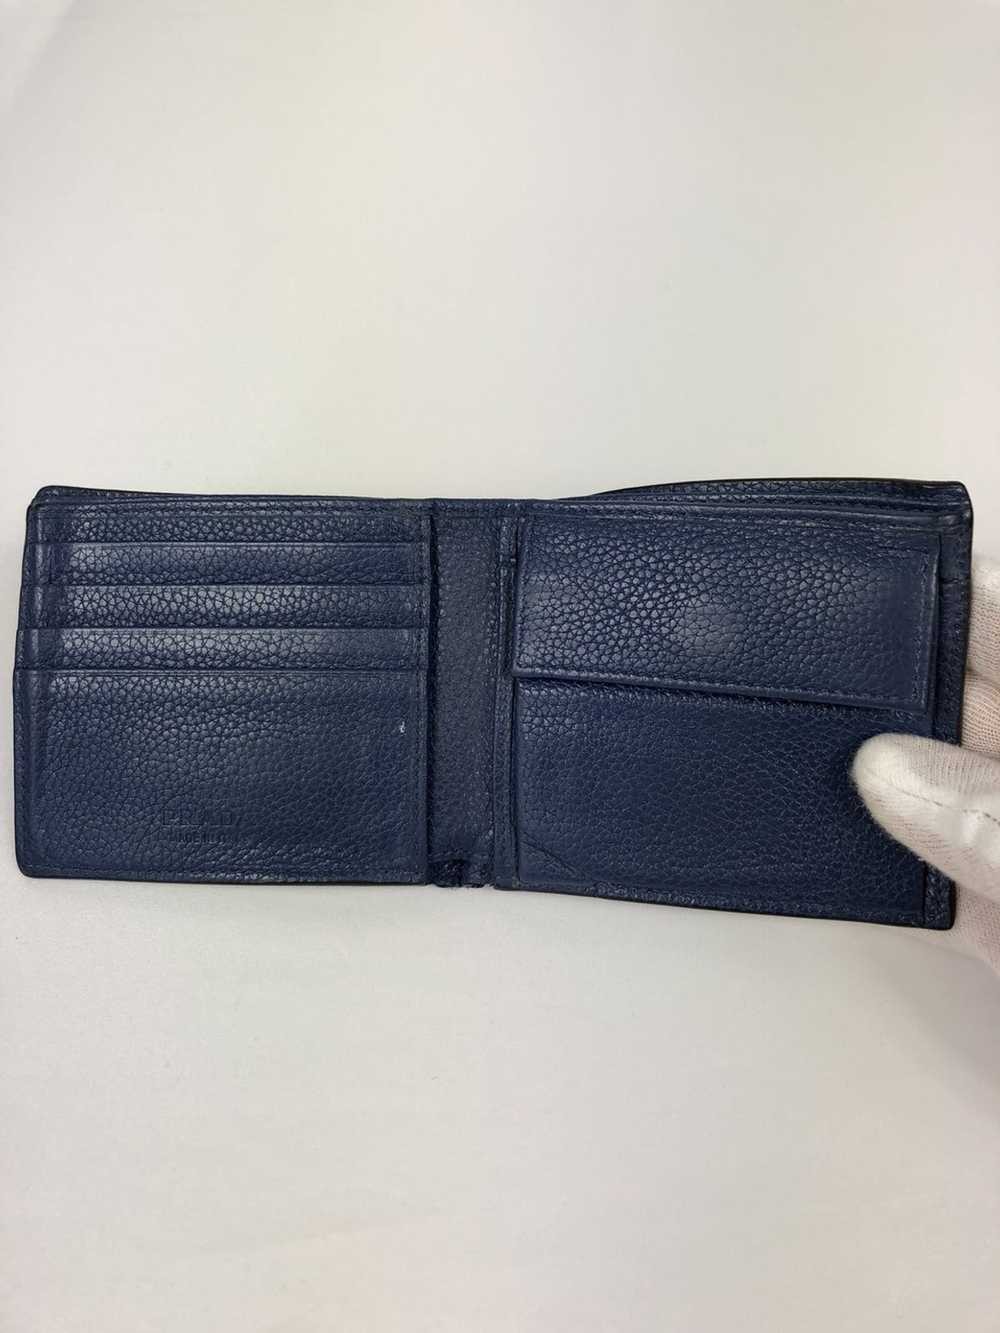 Prada Prada blue leather bifold wallet - image 3